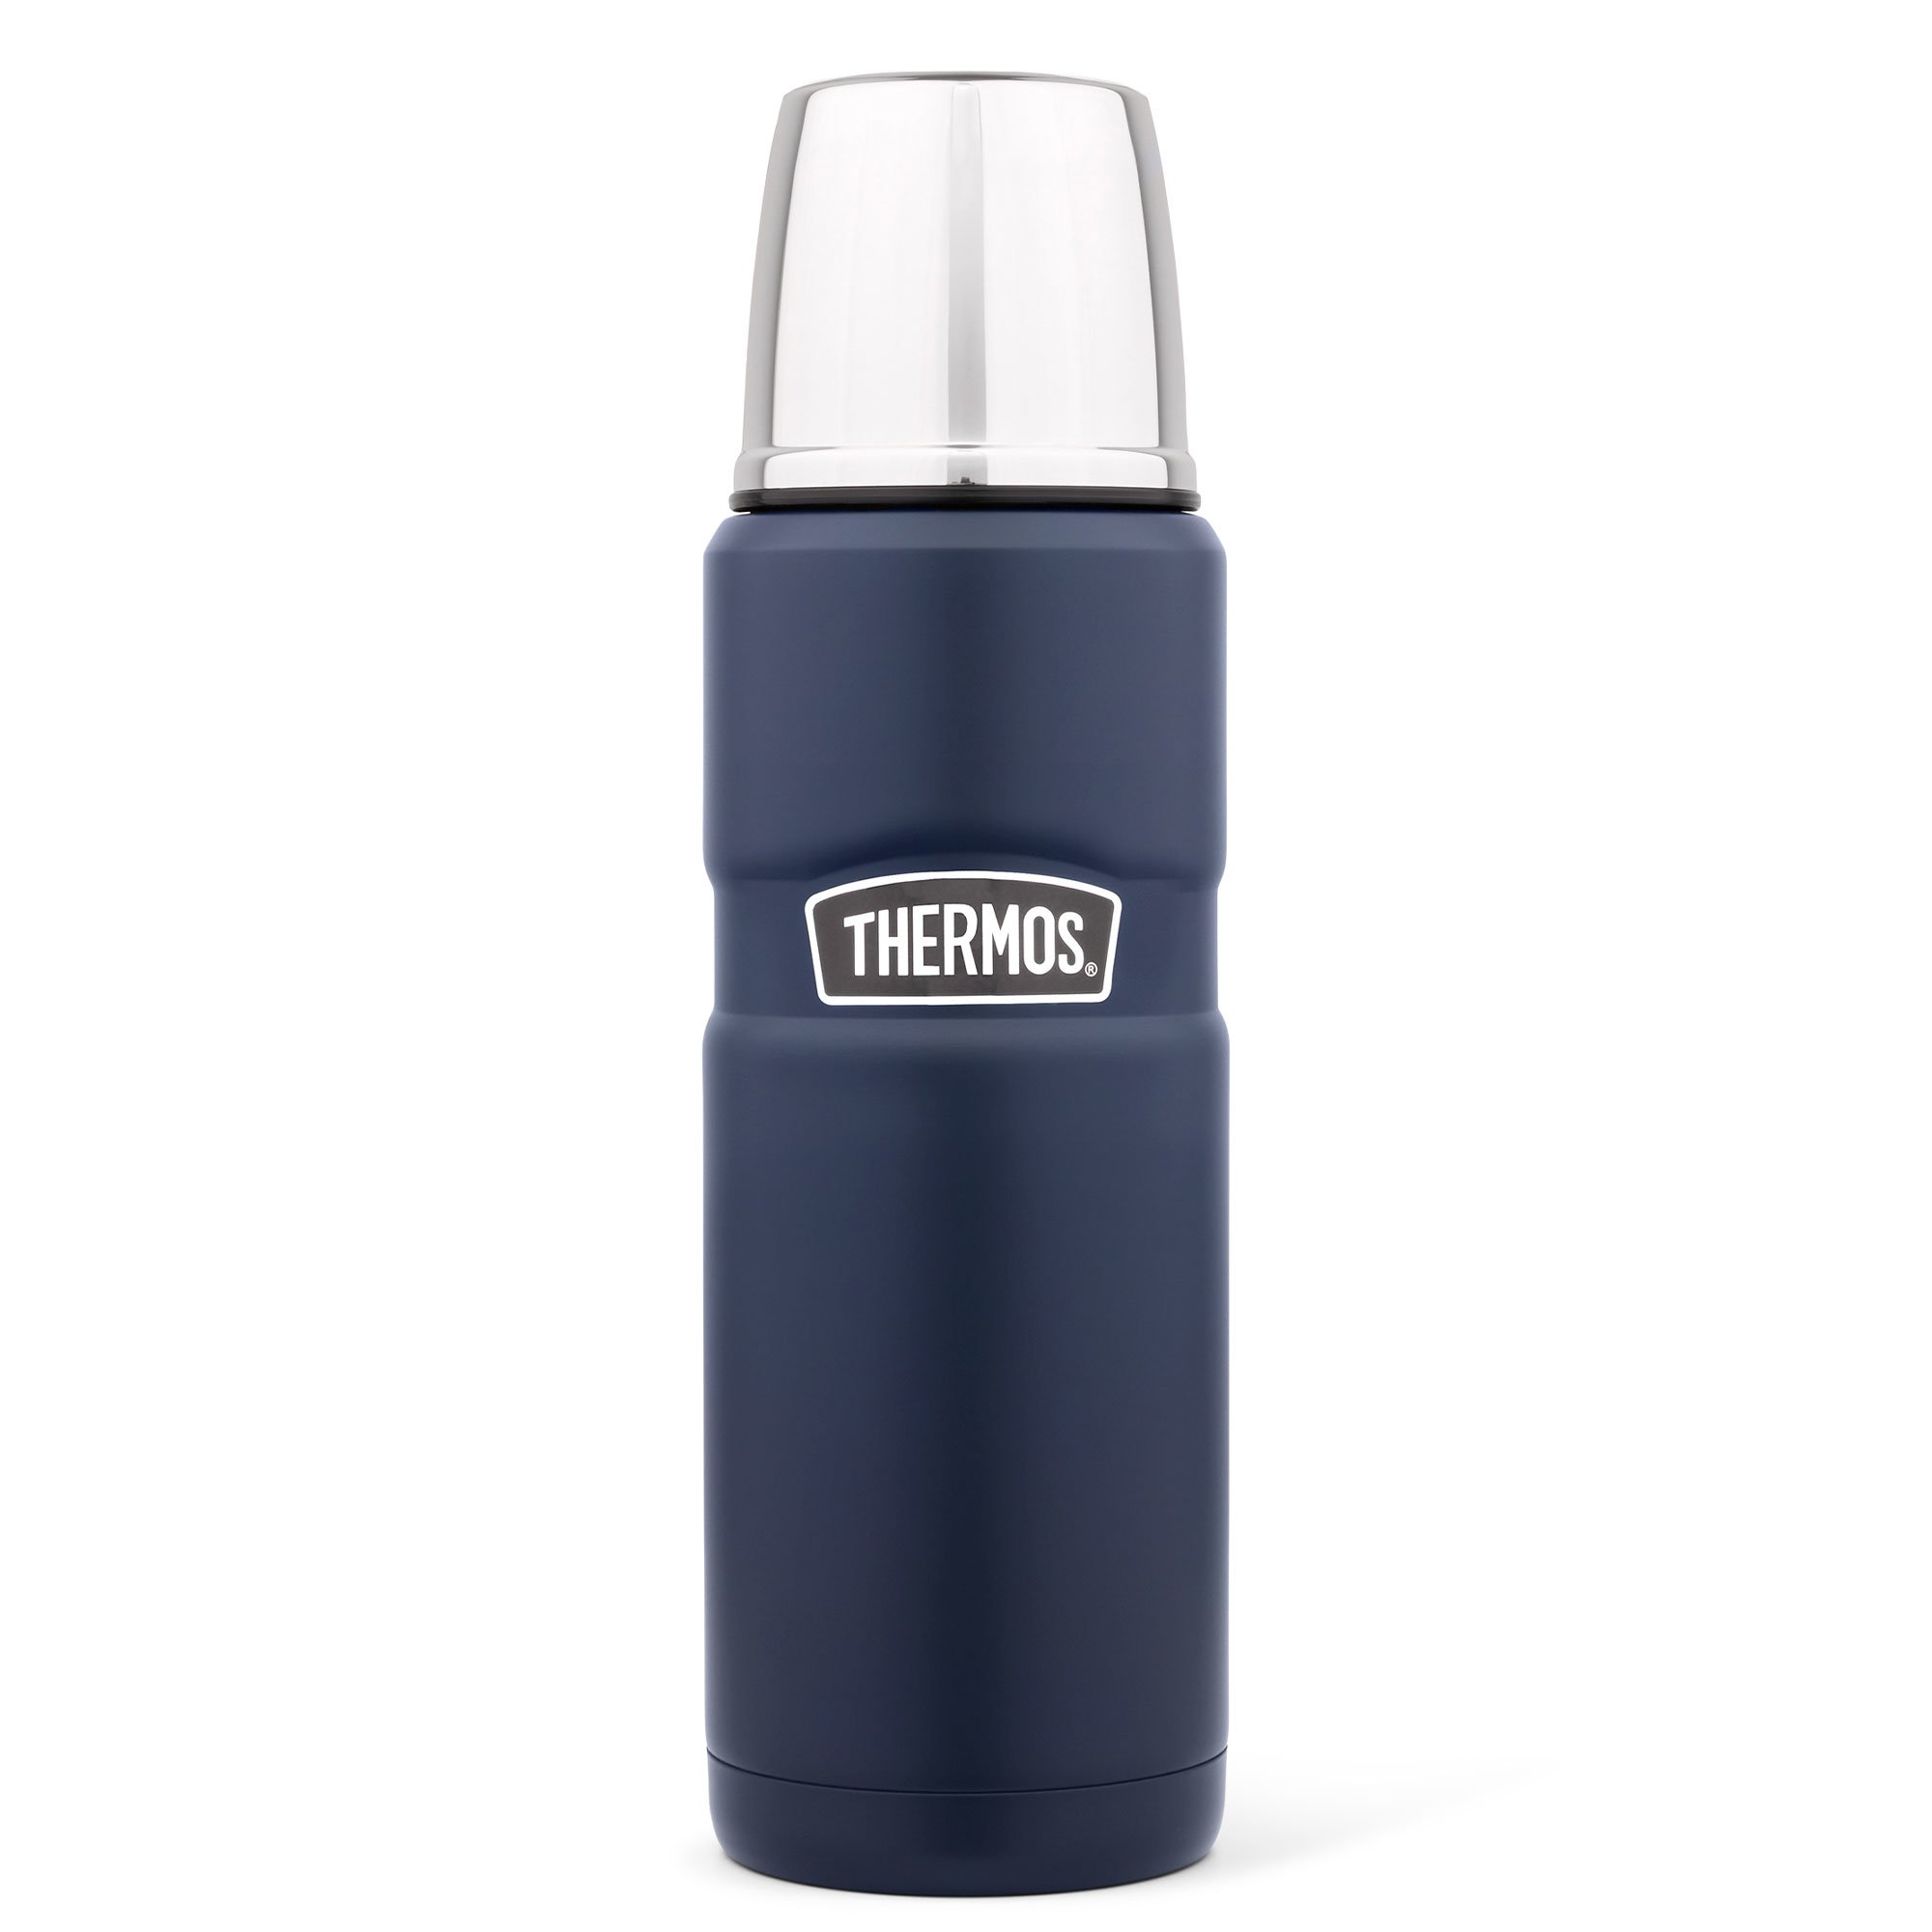 Thermos King termokande 0,5 liter, navy